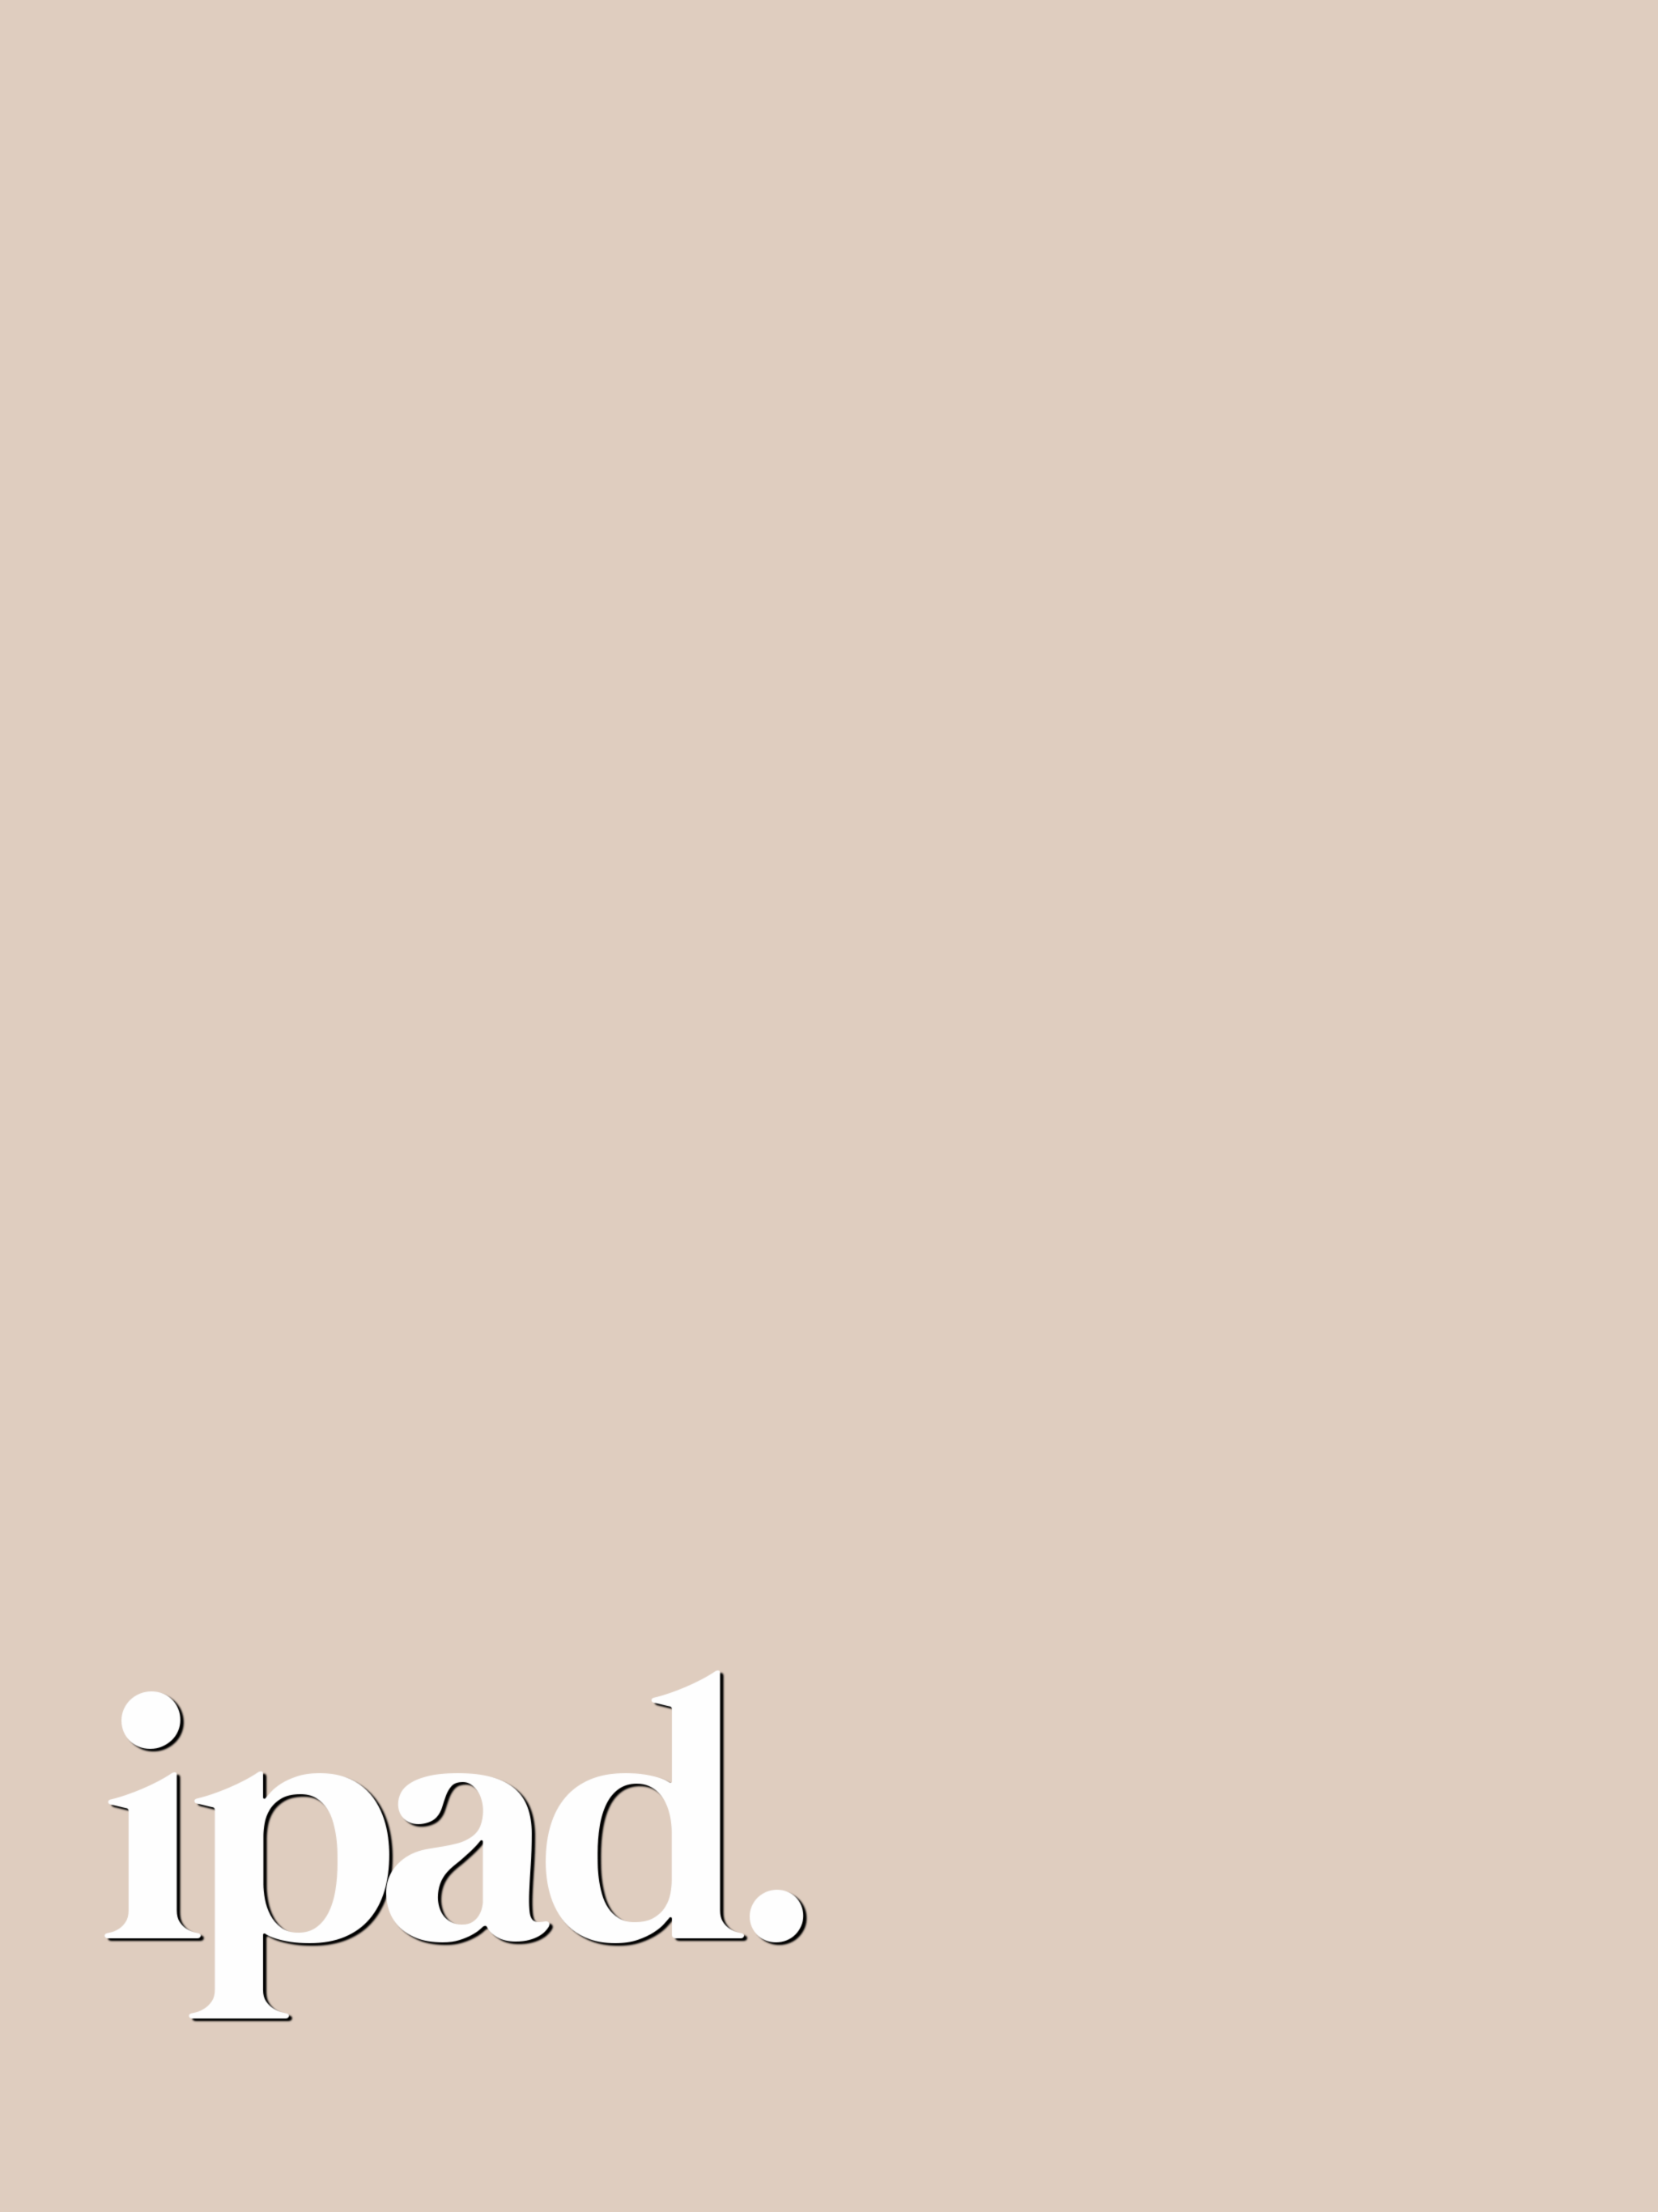 Free aesthetic iPad pro 2020 background, wallpaper & screensavers